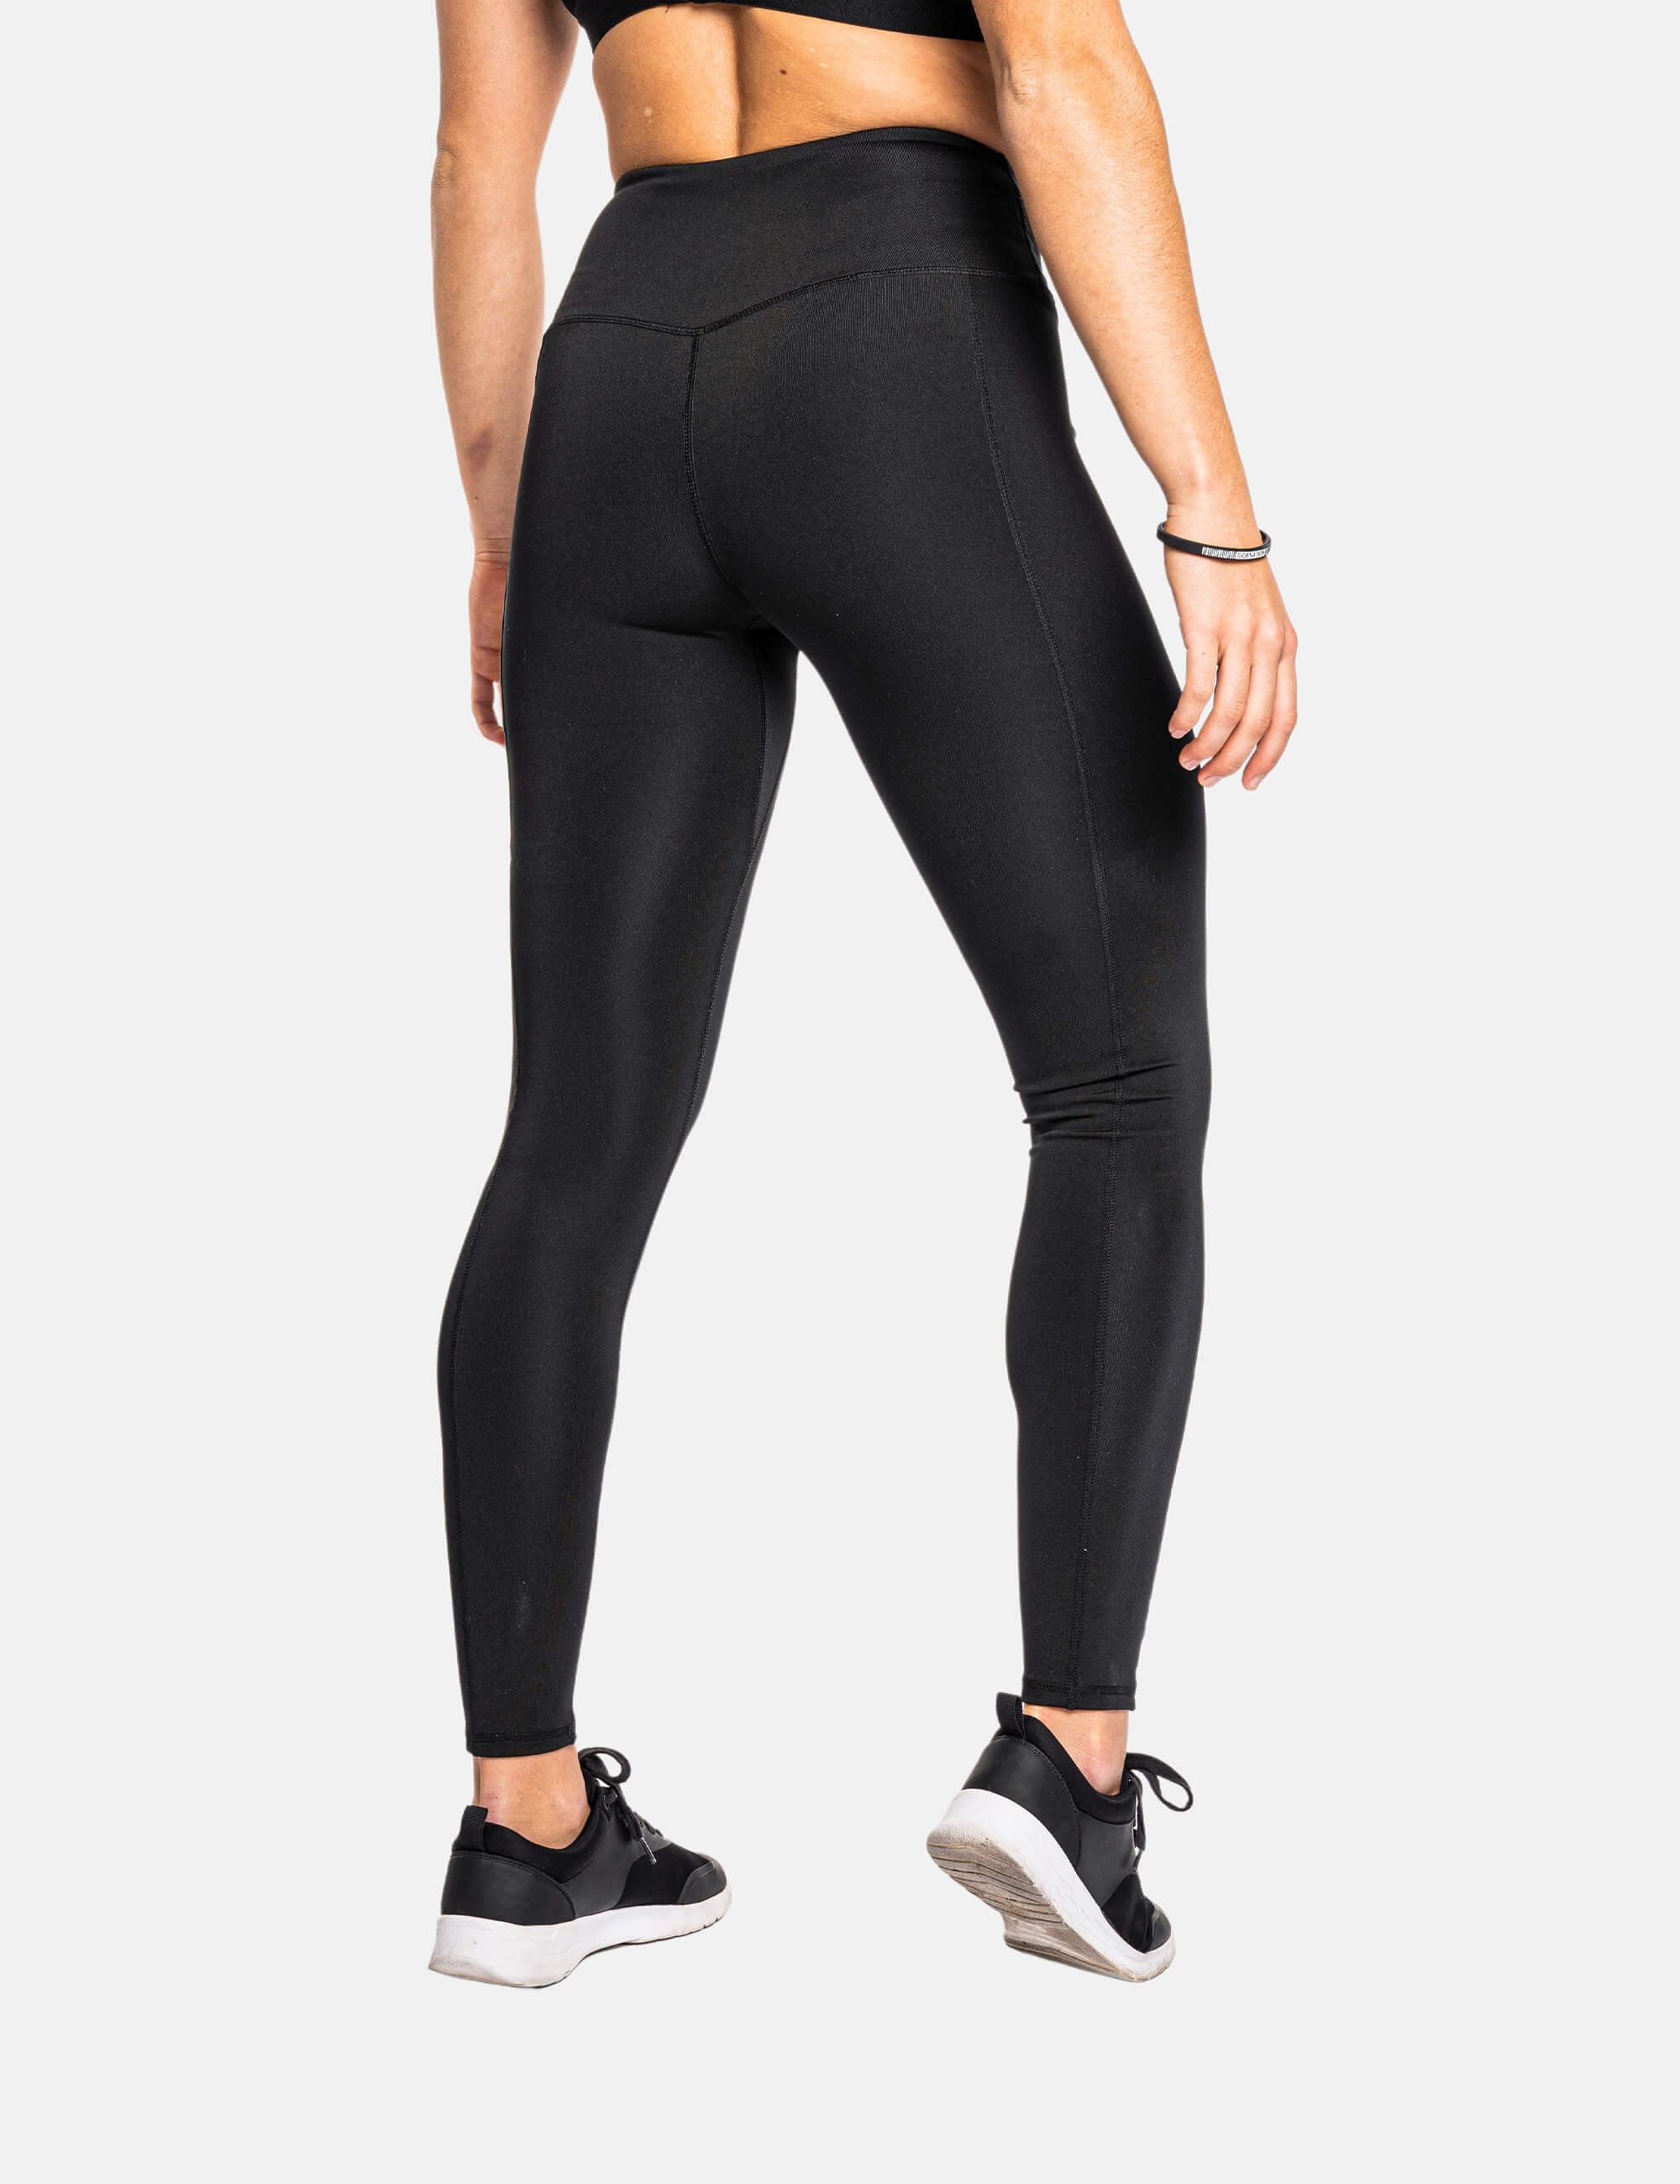 Can men wear black workout pants? - Quora